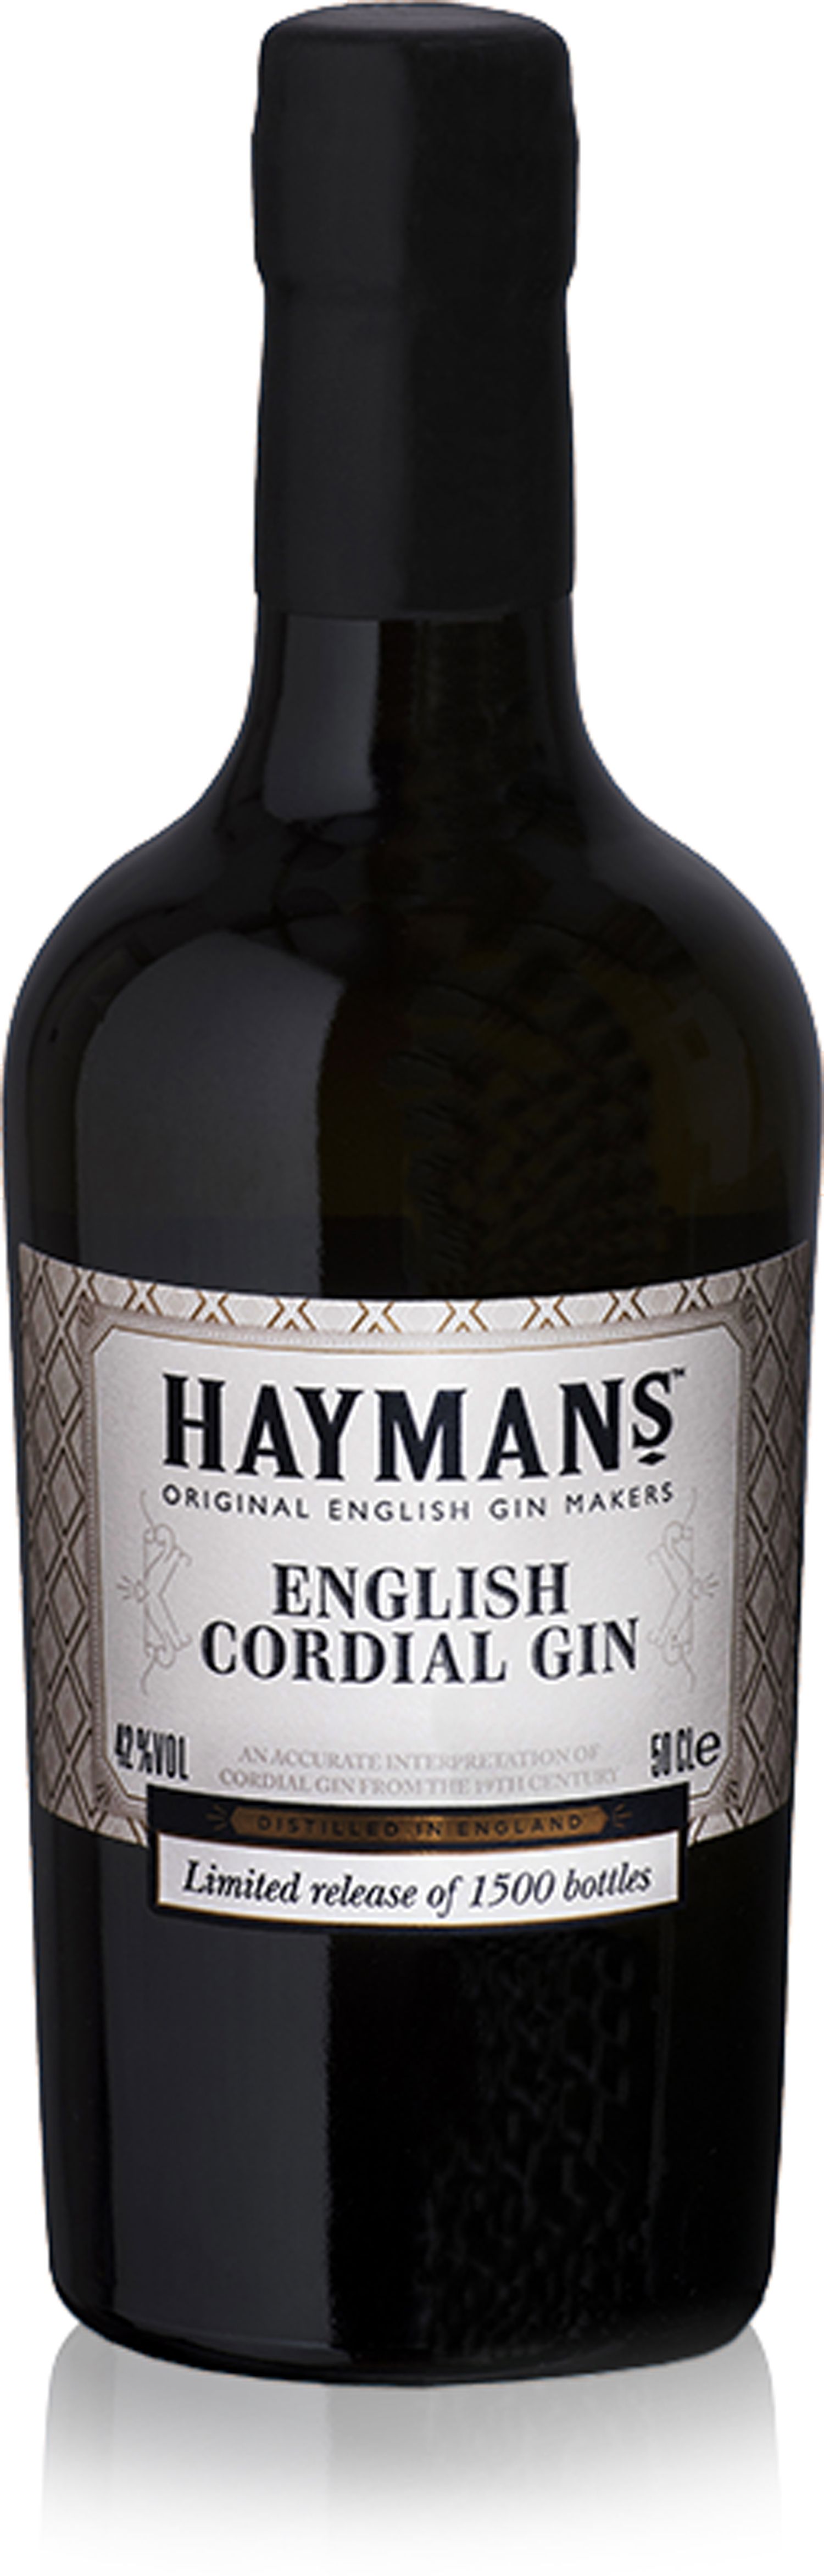 English 50cl Cordial Gin Haymans